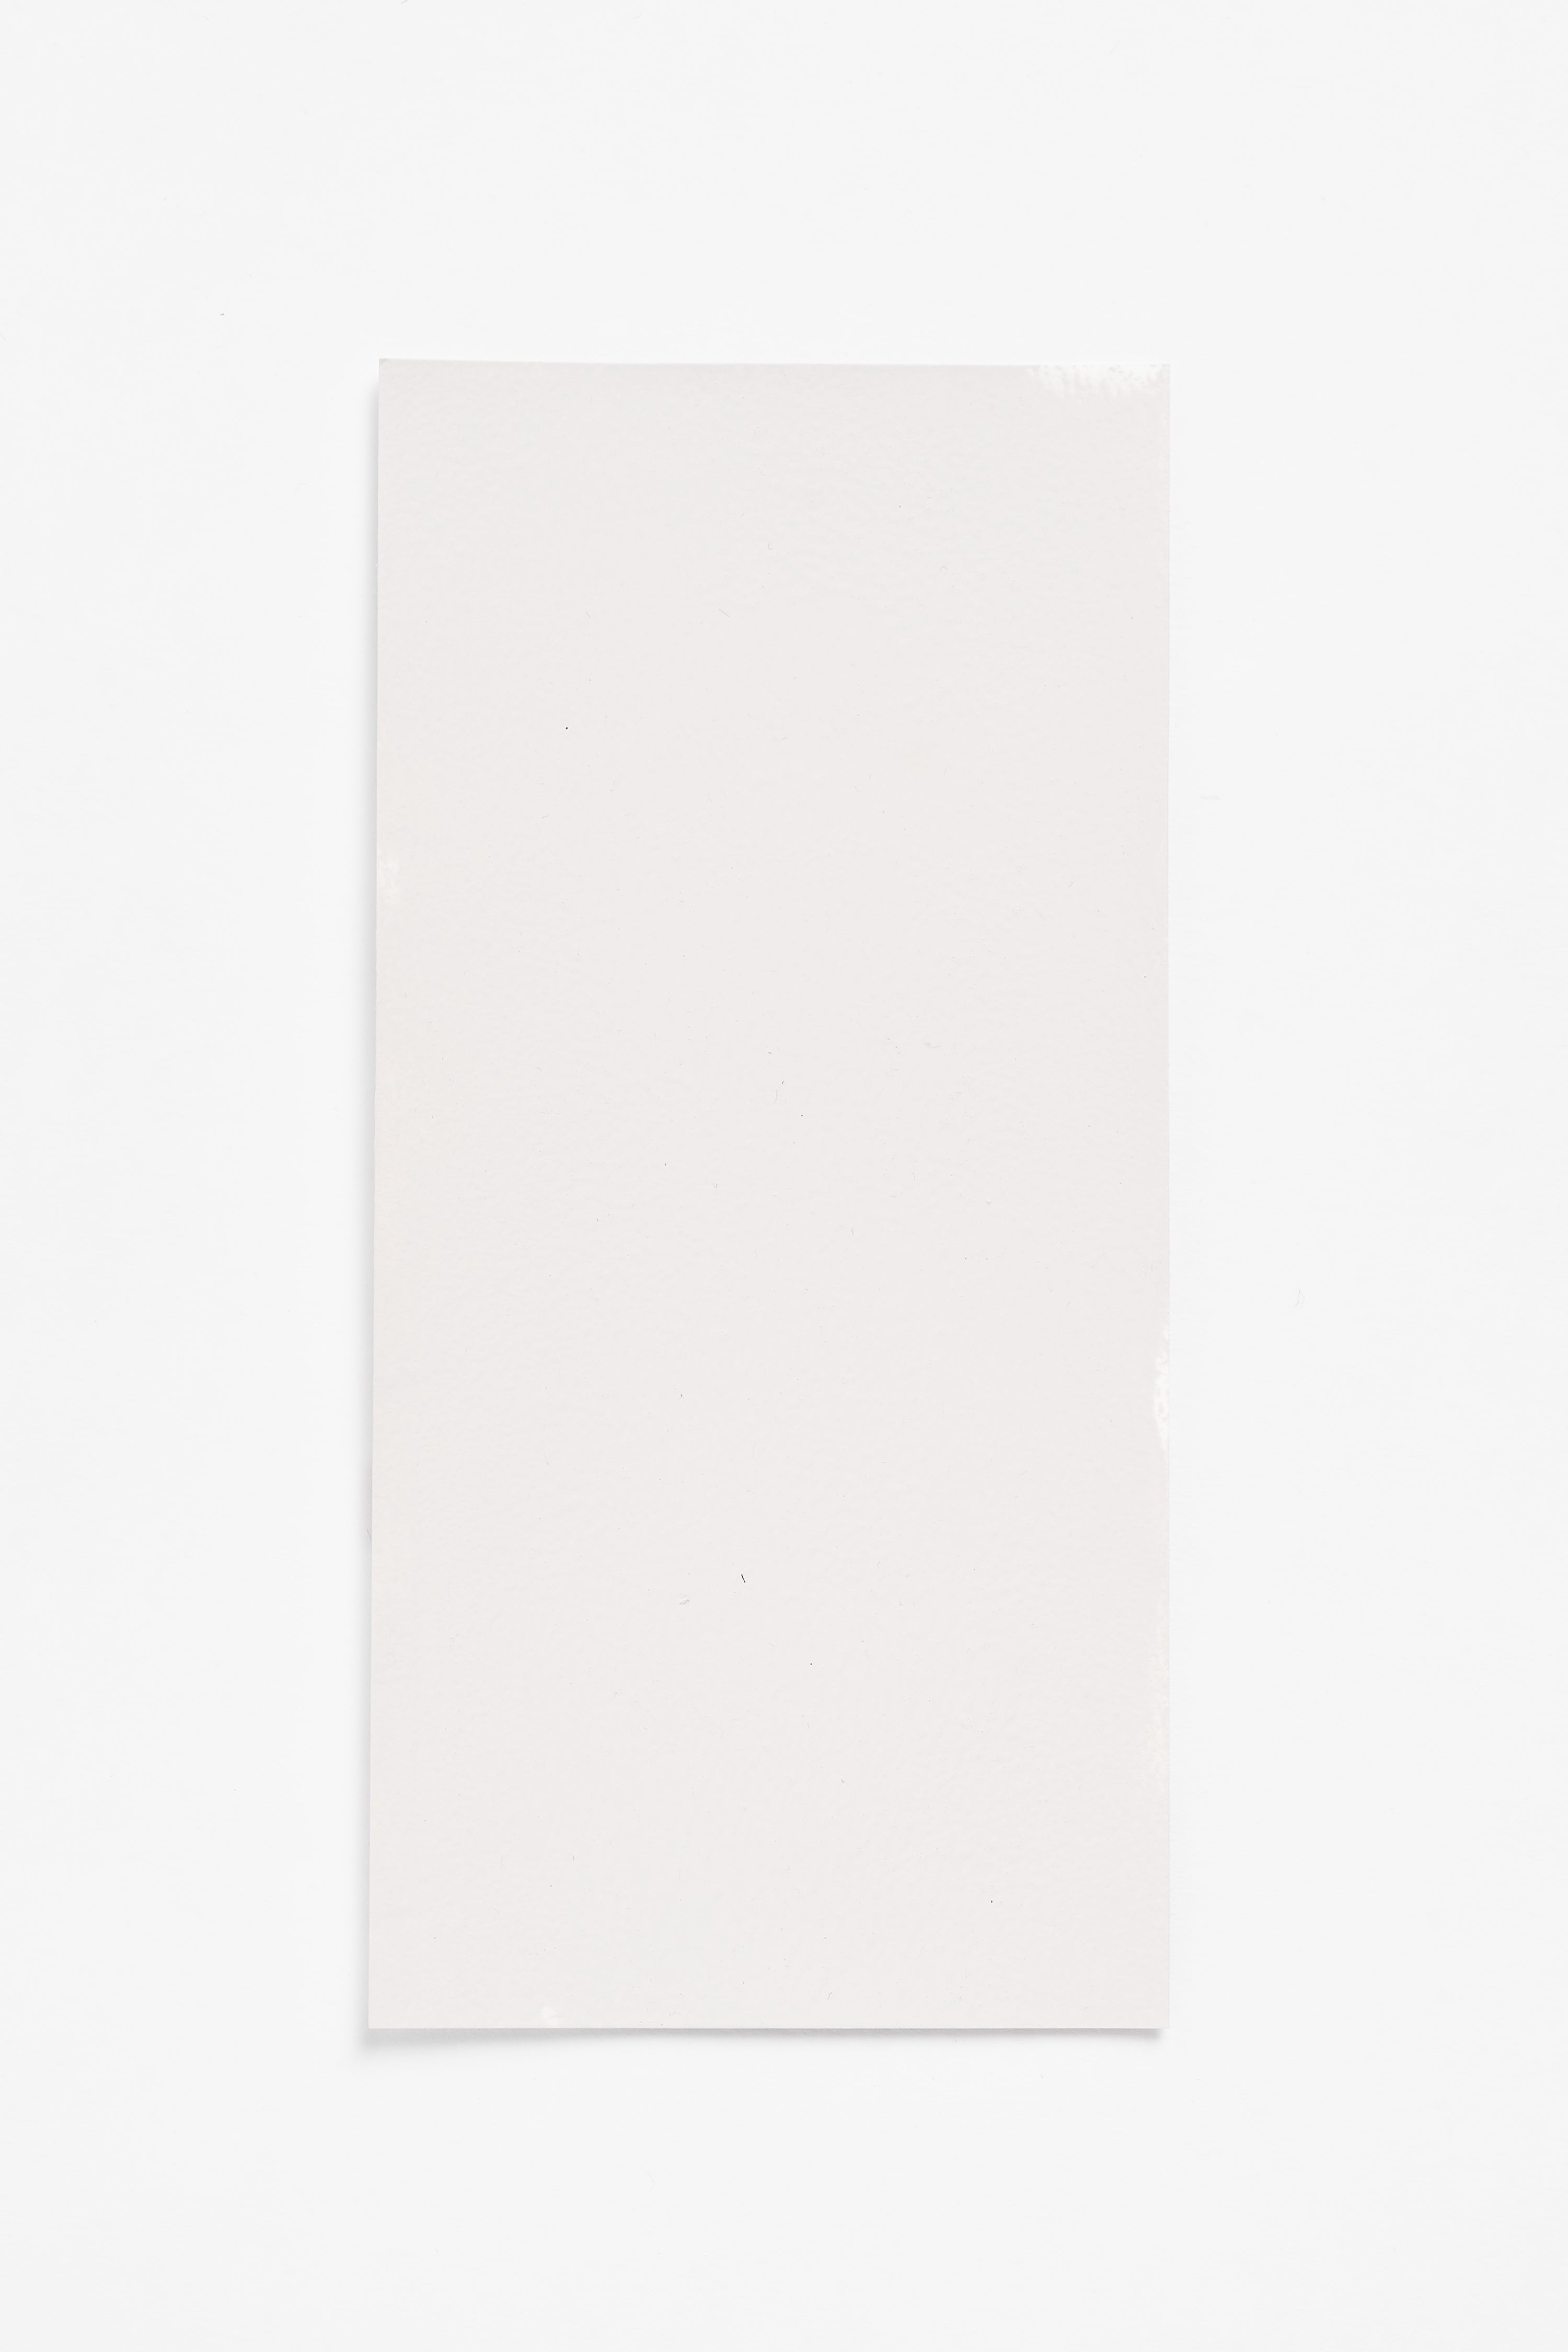 Gypsum — a paint colour developed by John Pawson for Blēo